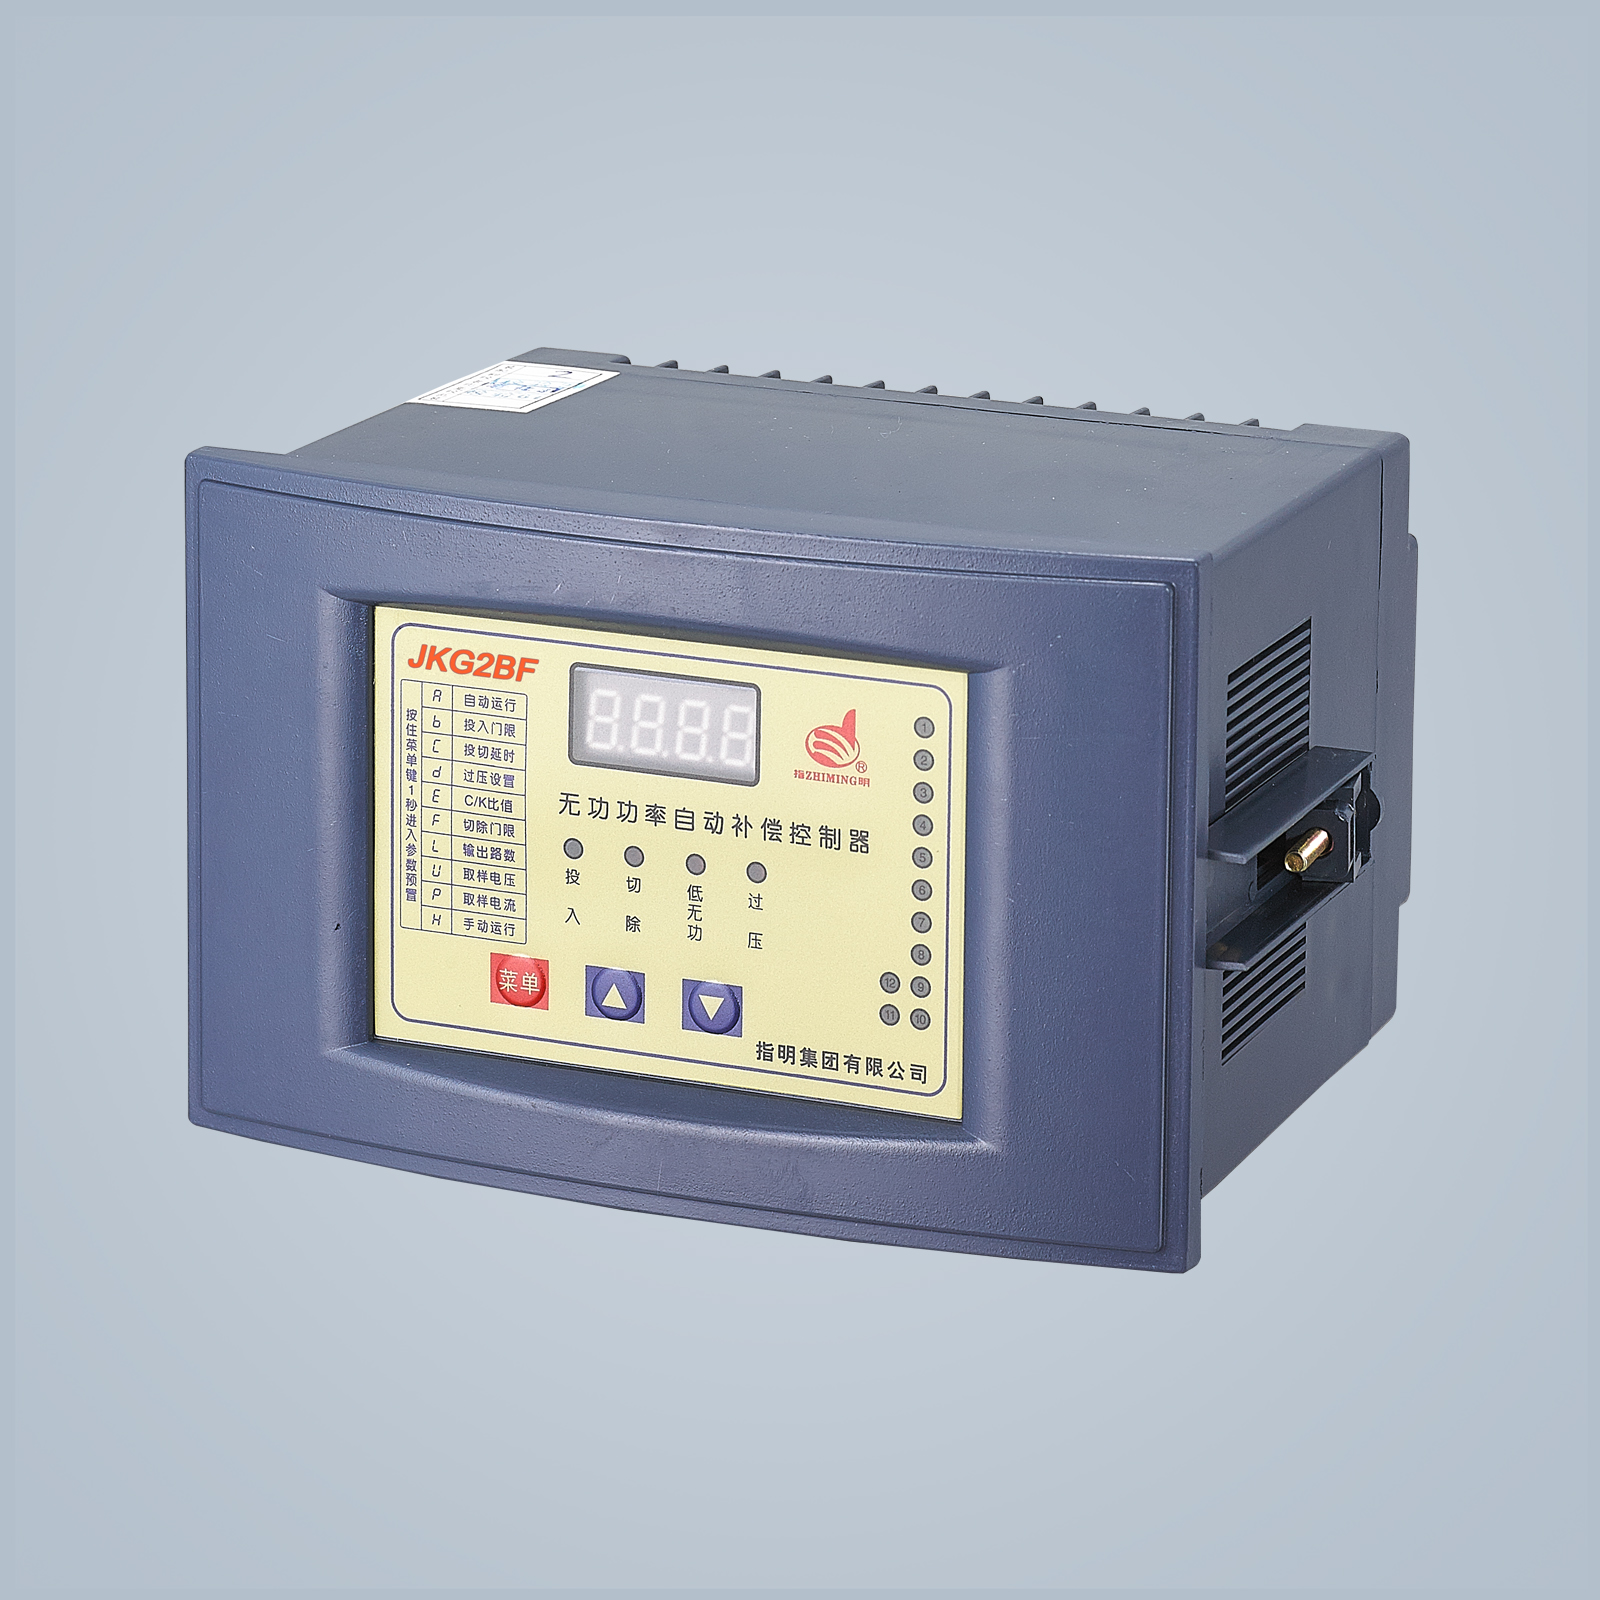 JKG2BF Series Reactive power auto-compen sation controller 220V